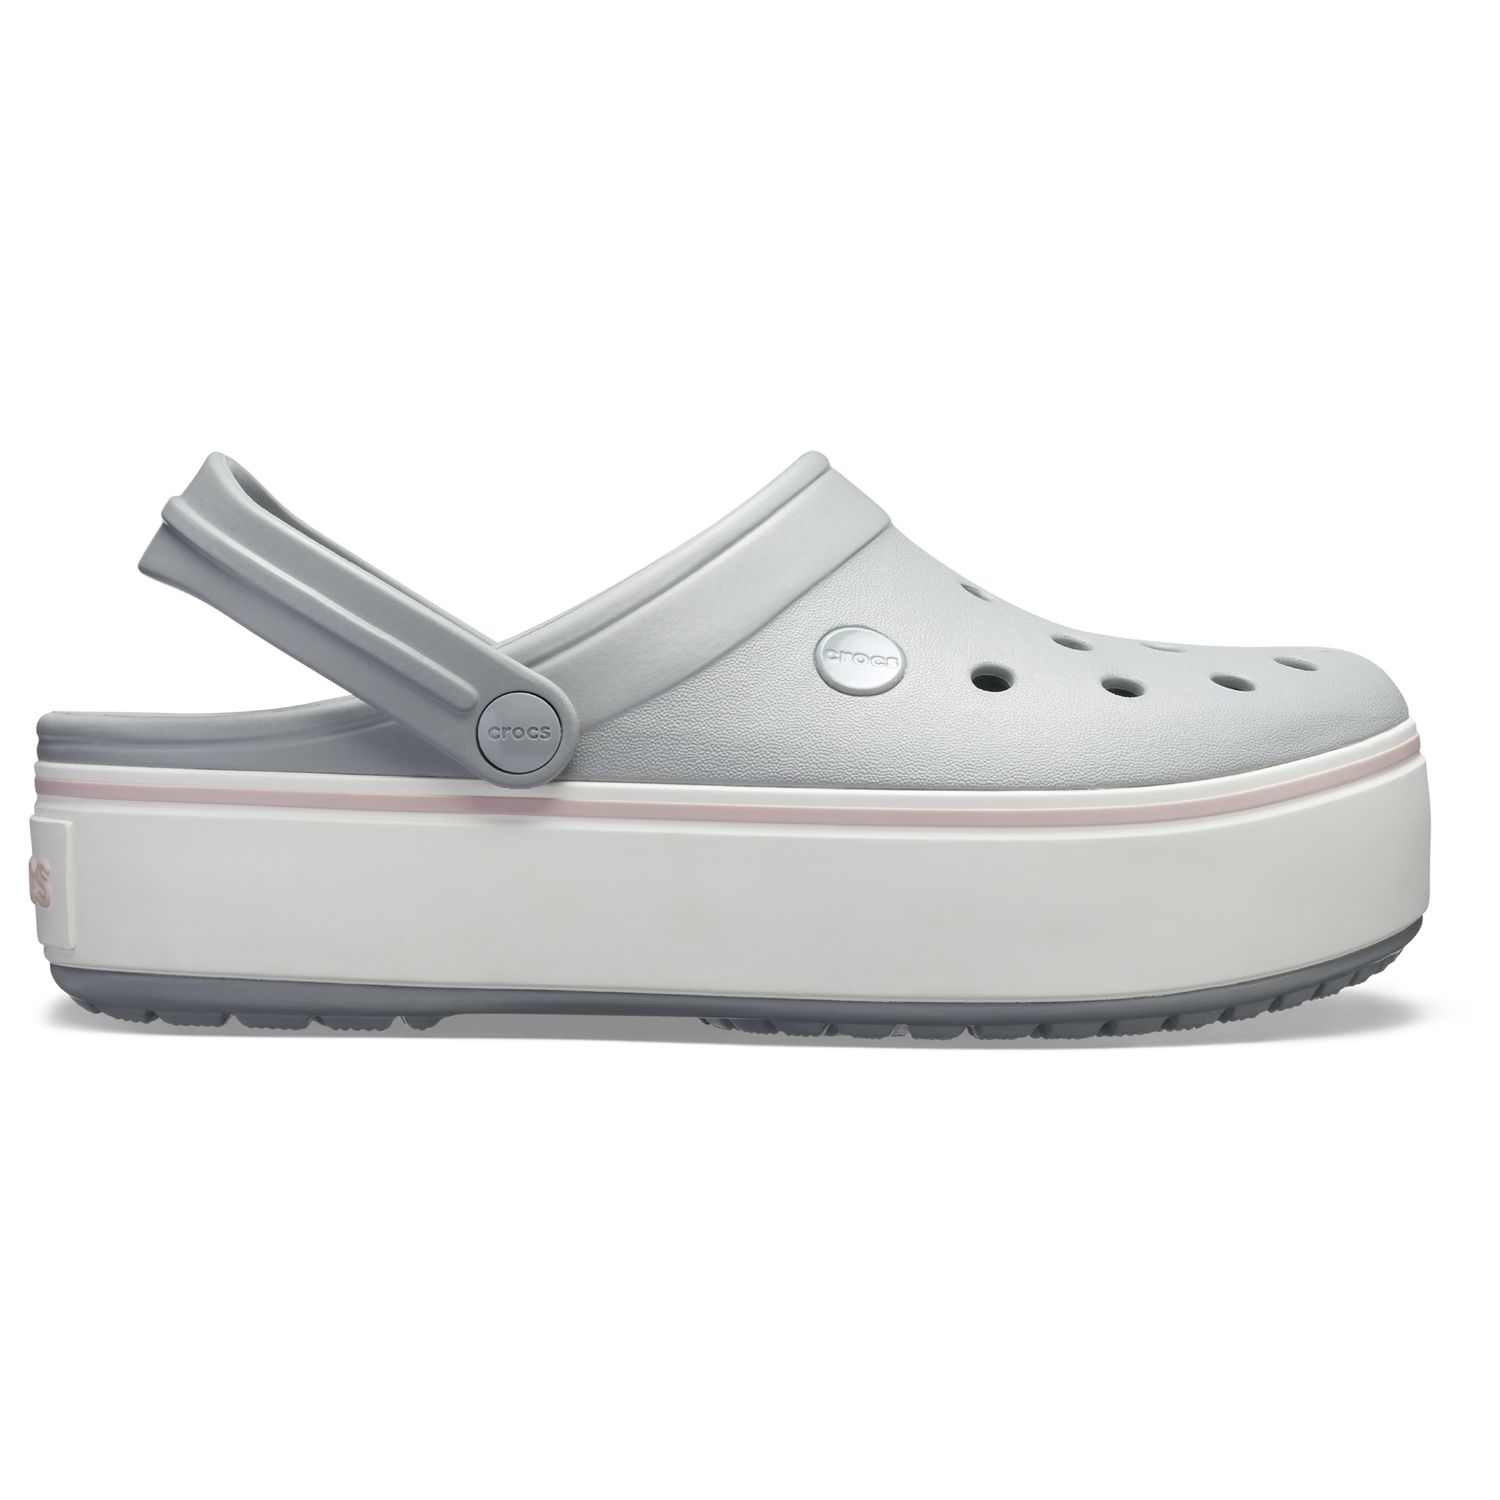 crocs women's platform shoes